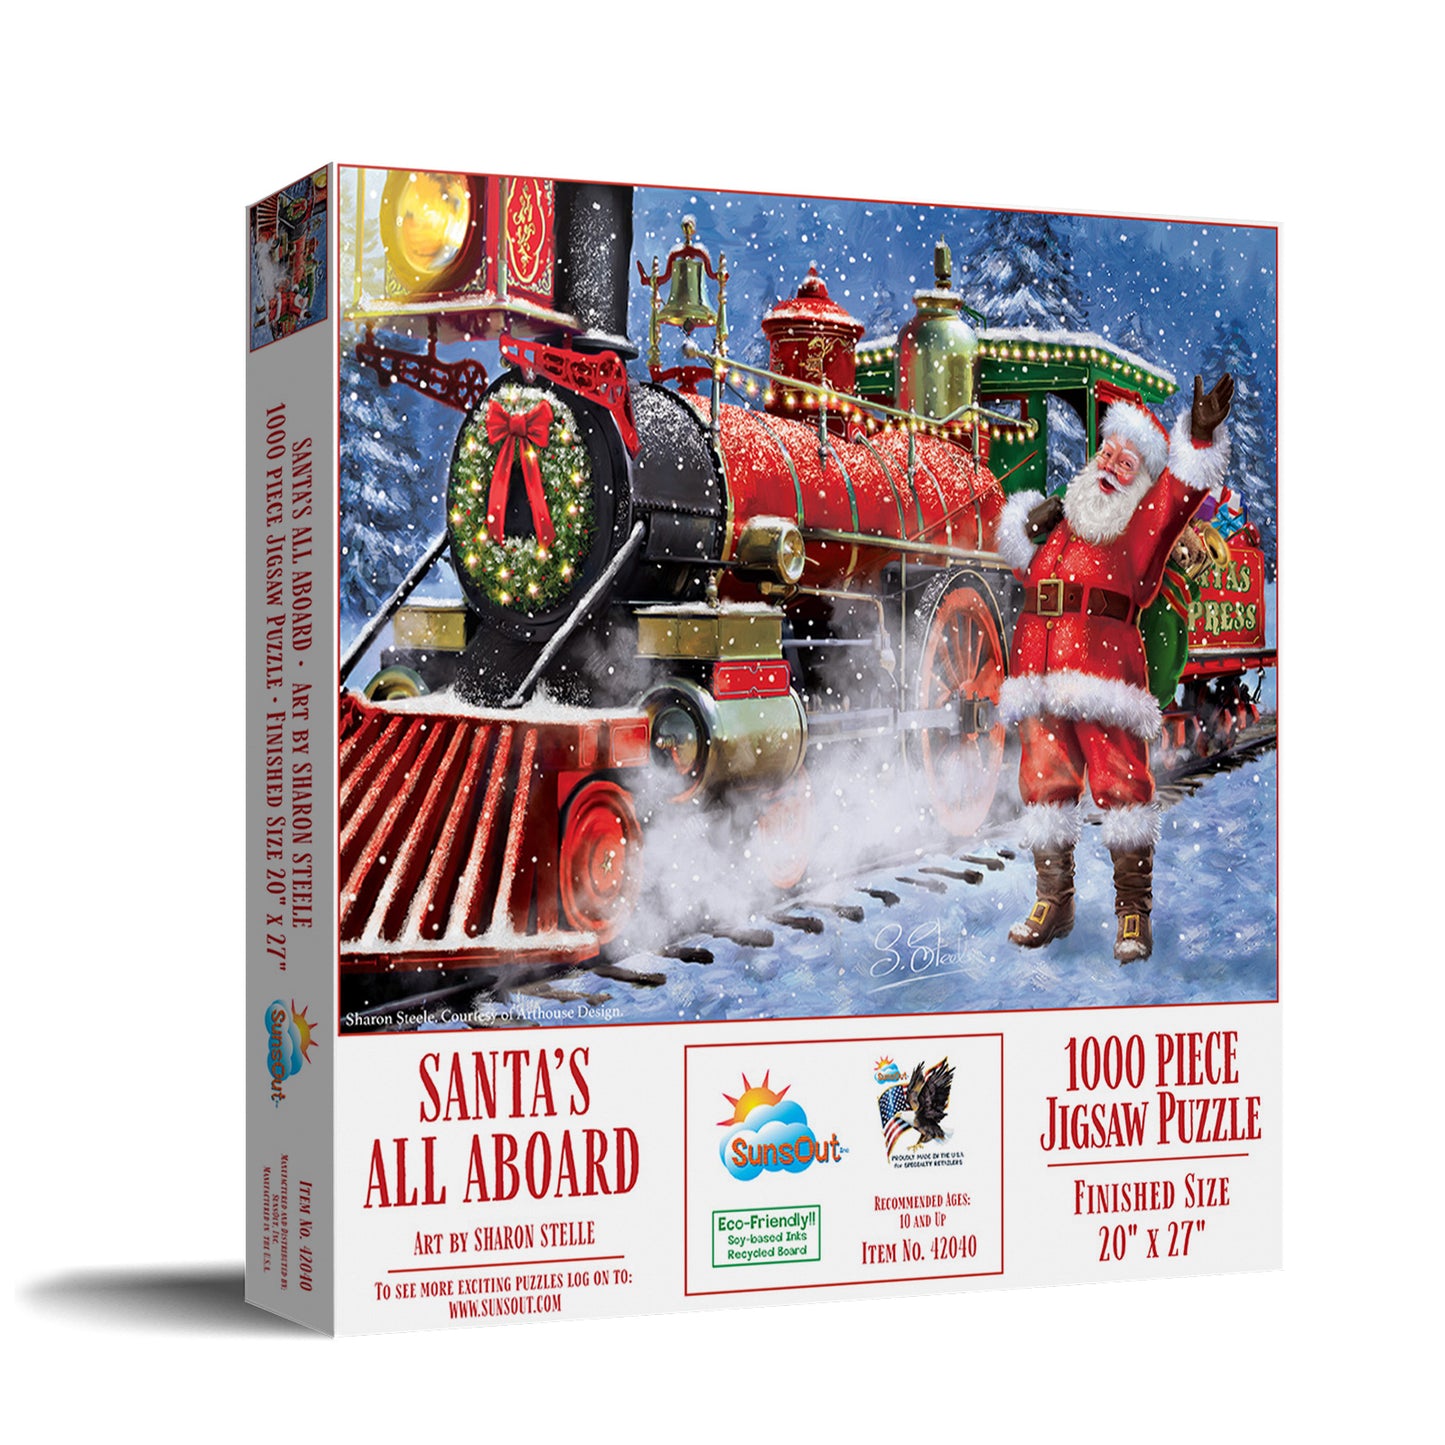 Santa's All Aboard - 1000 Piece Jigsaw Puzzle